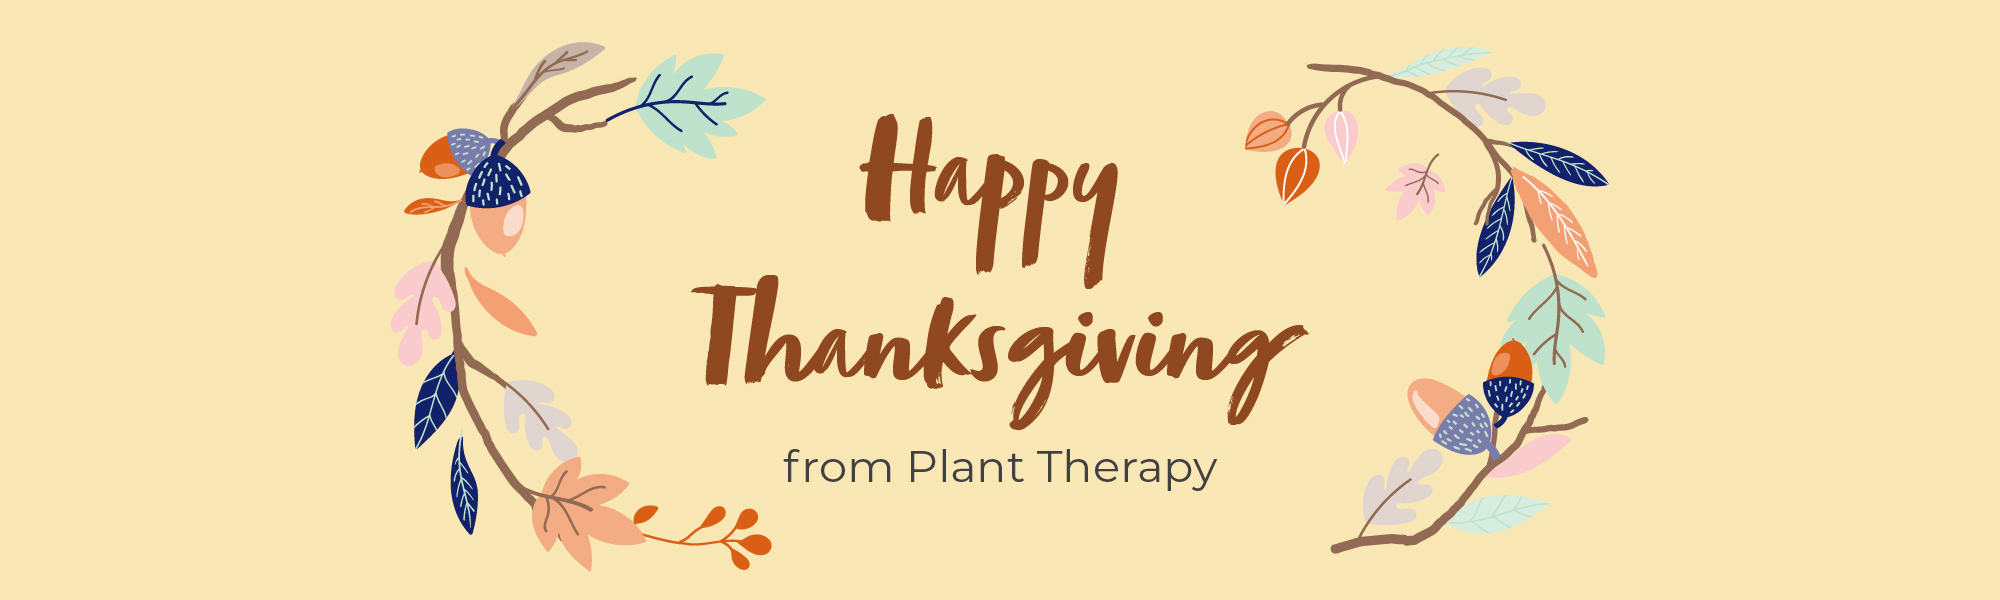 PlantTherapy-HappyThanksgiving-Homepage_Desktop_-26-11-2020-12-12-37.jpg